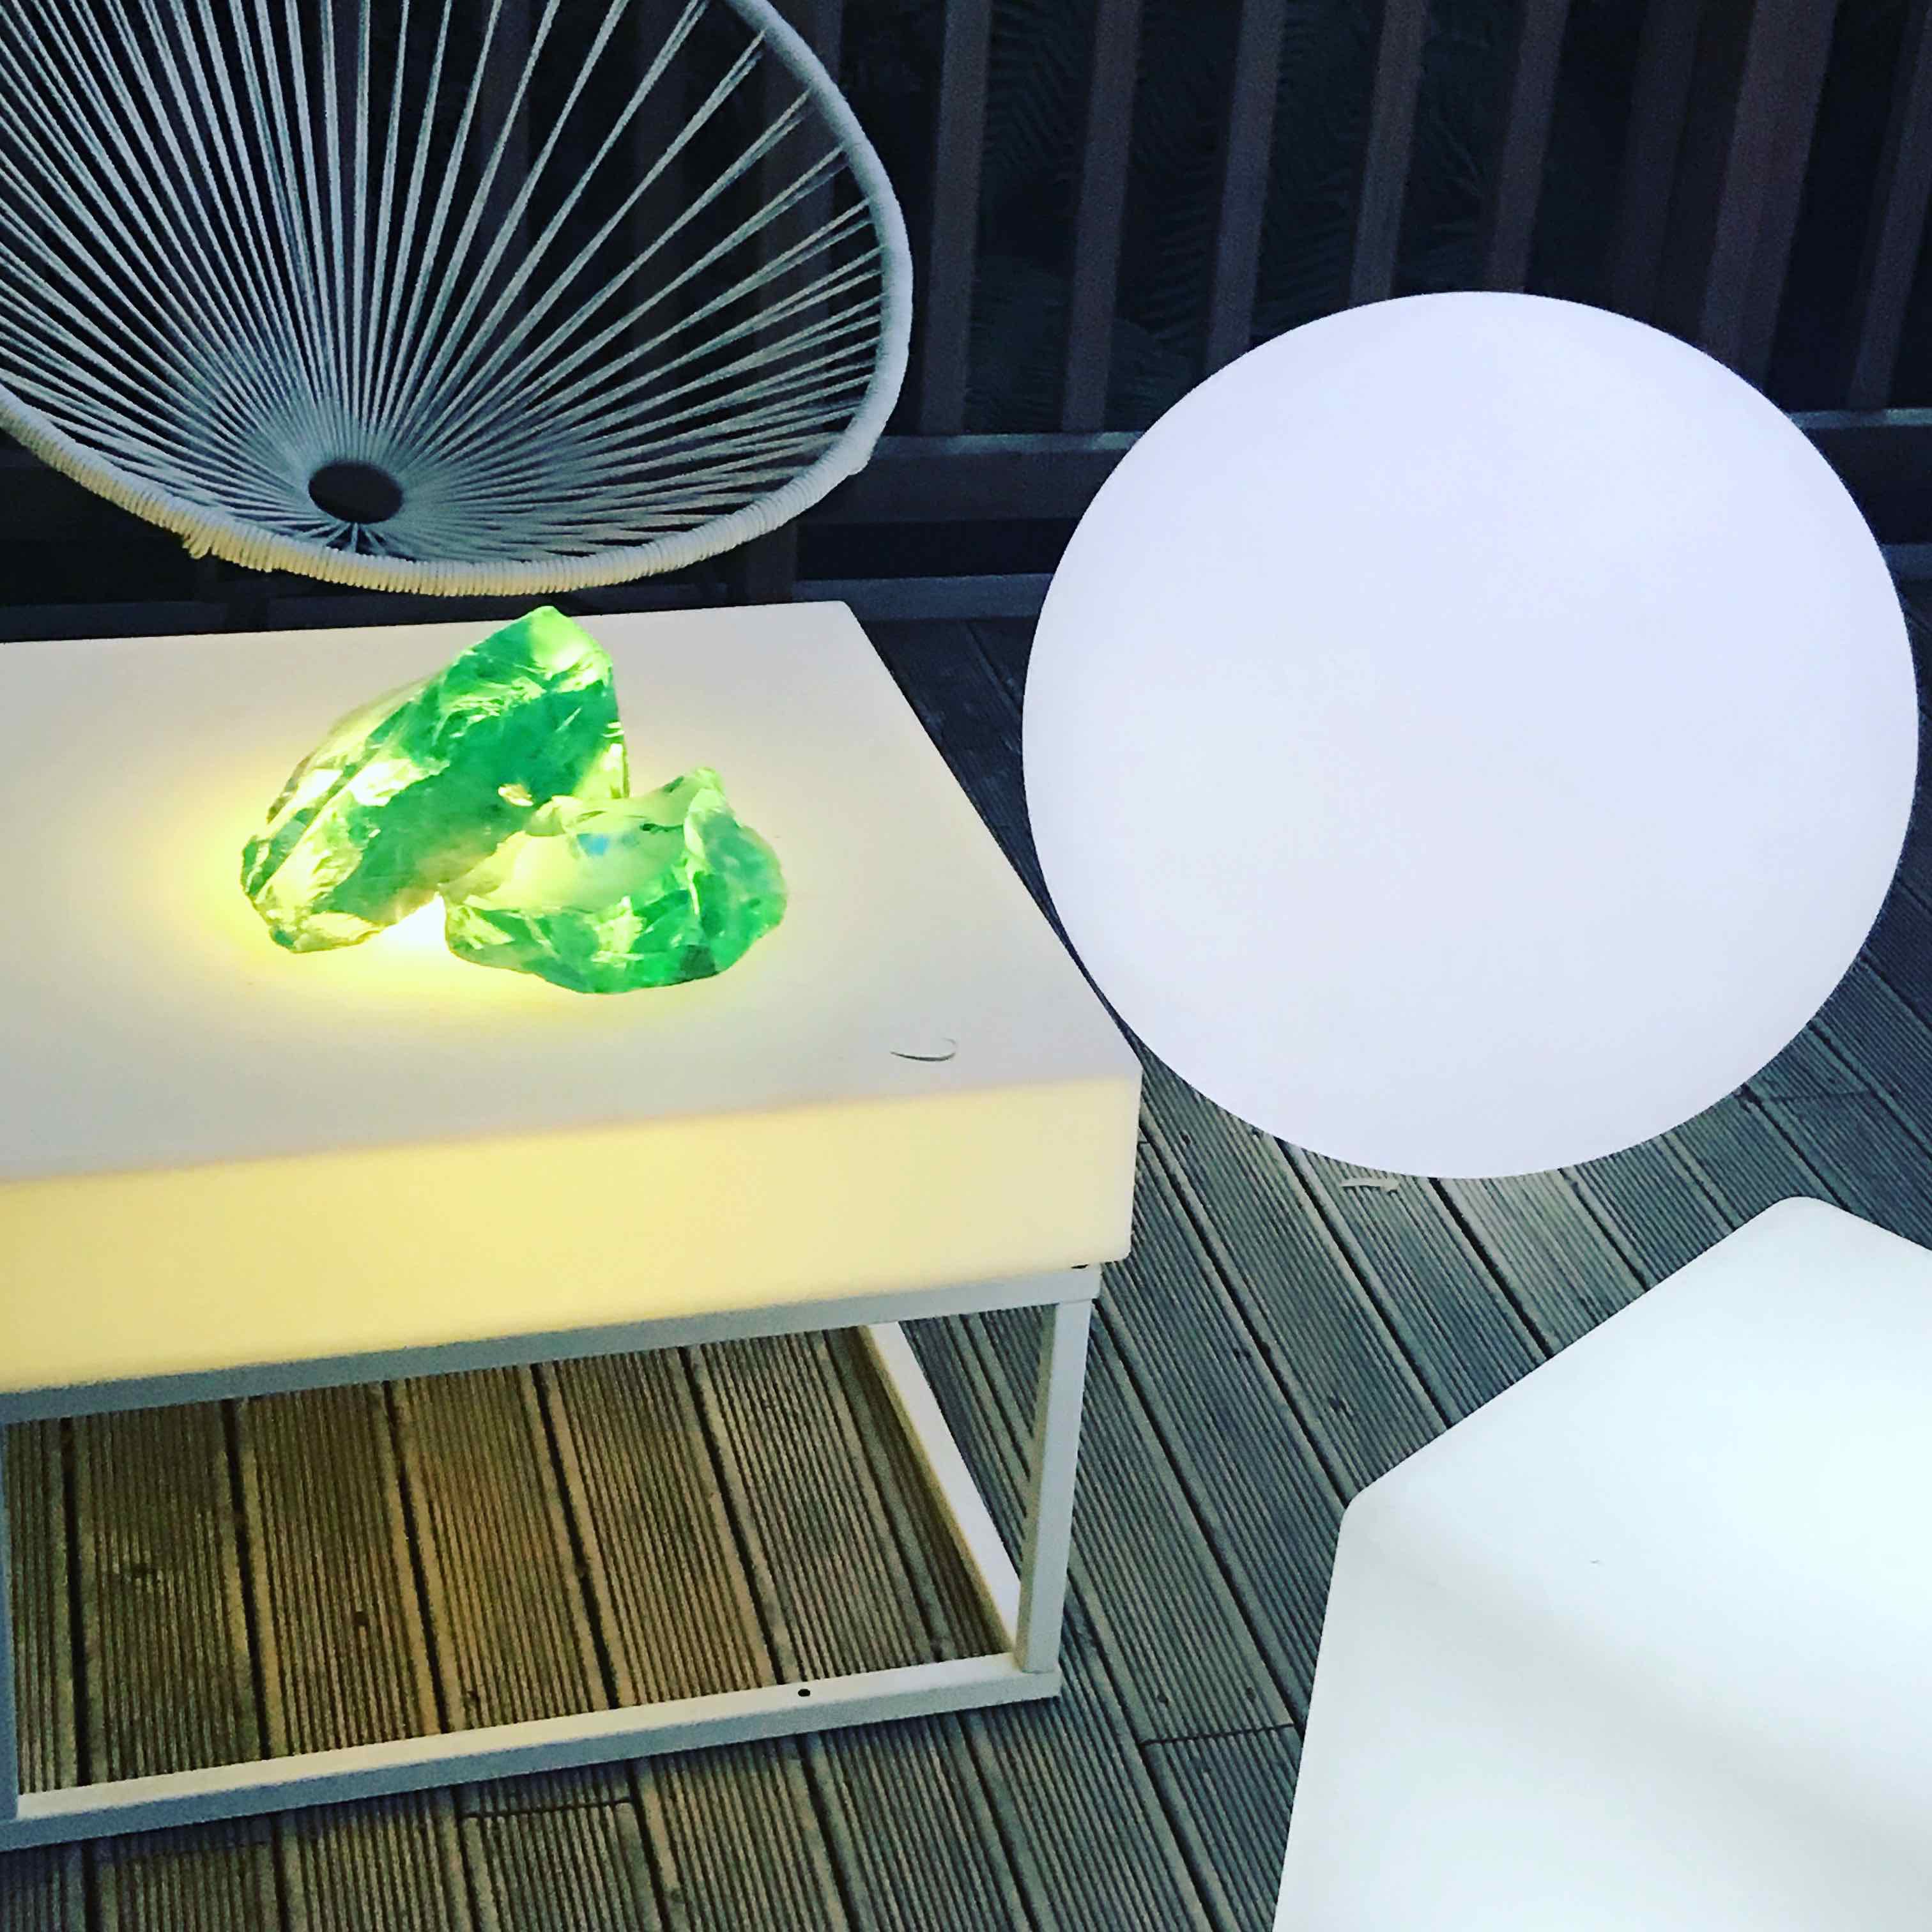 LED Coffee Table